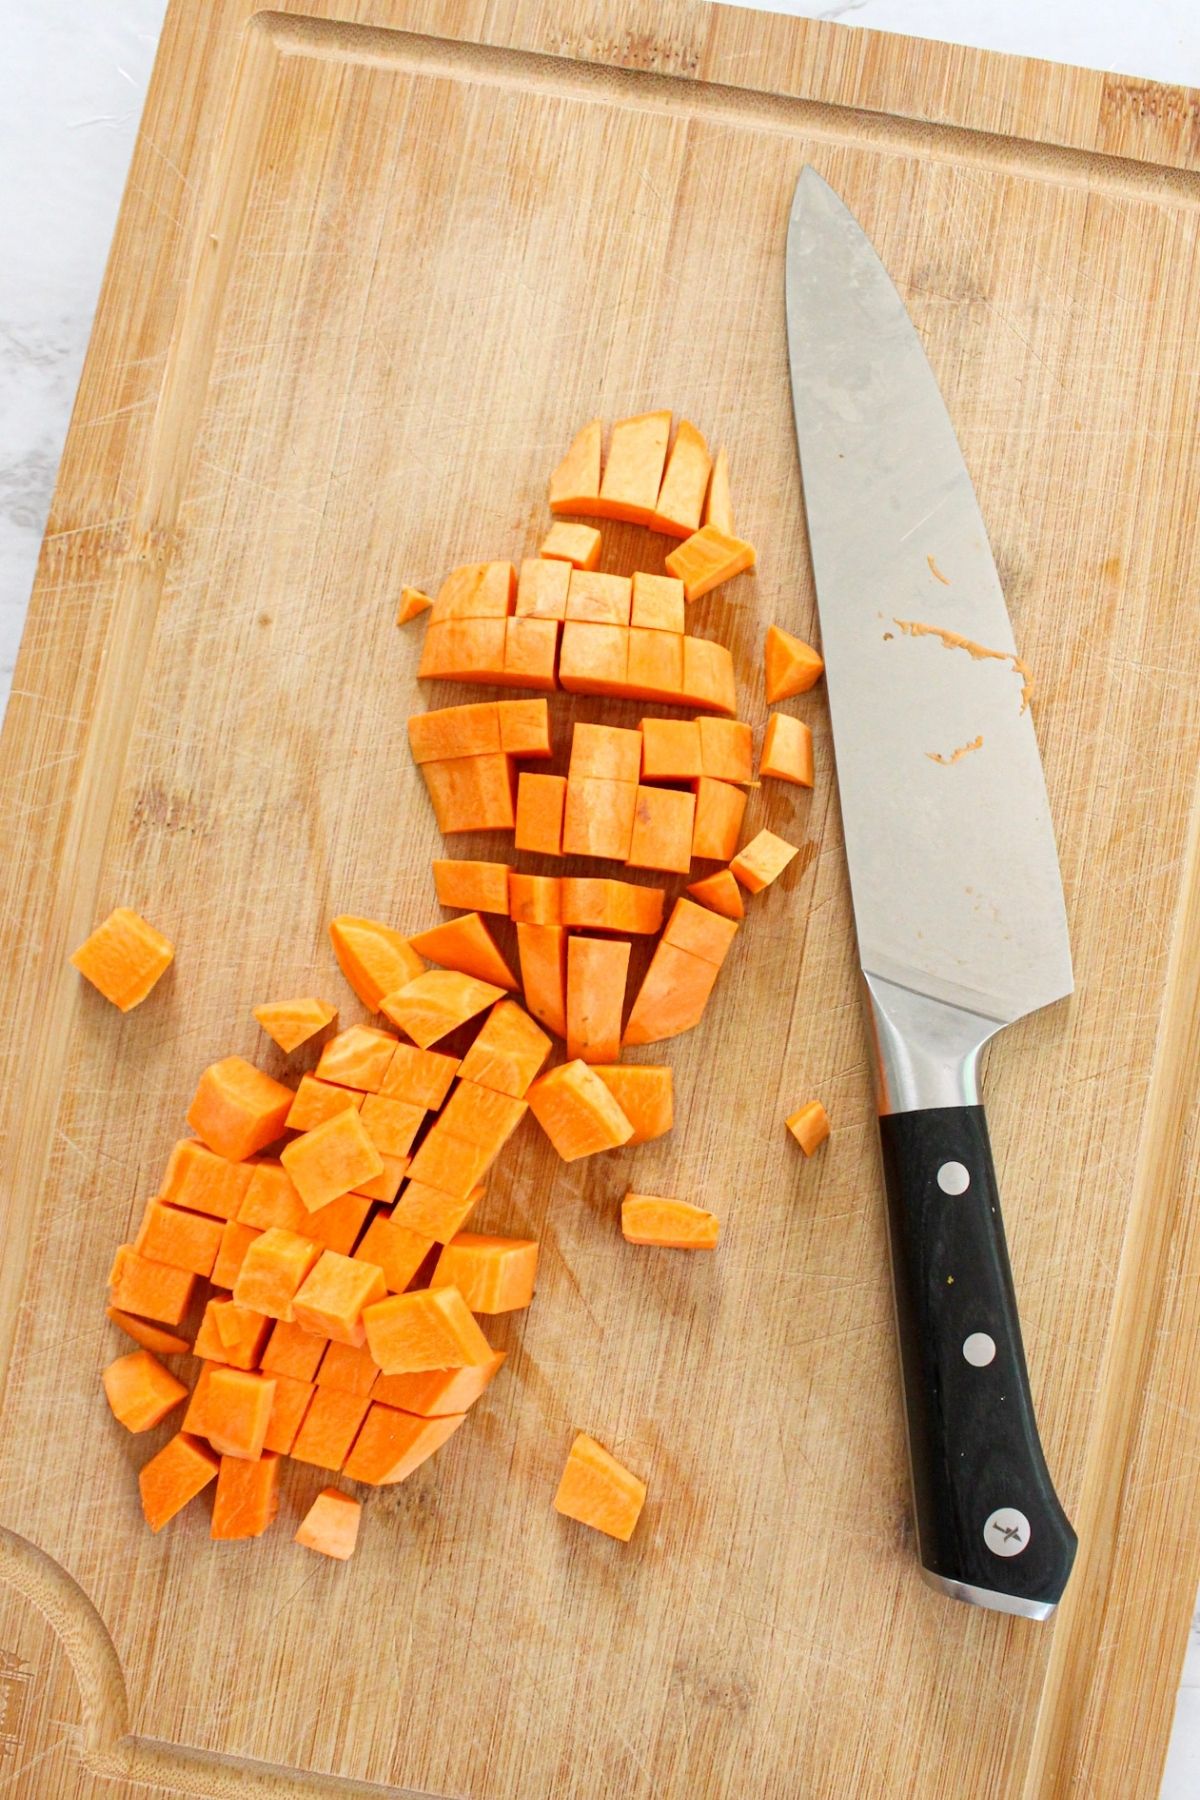 Sweet potato cubes on a cutting board